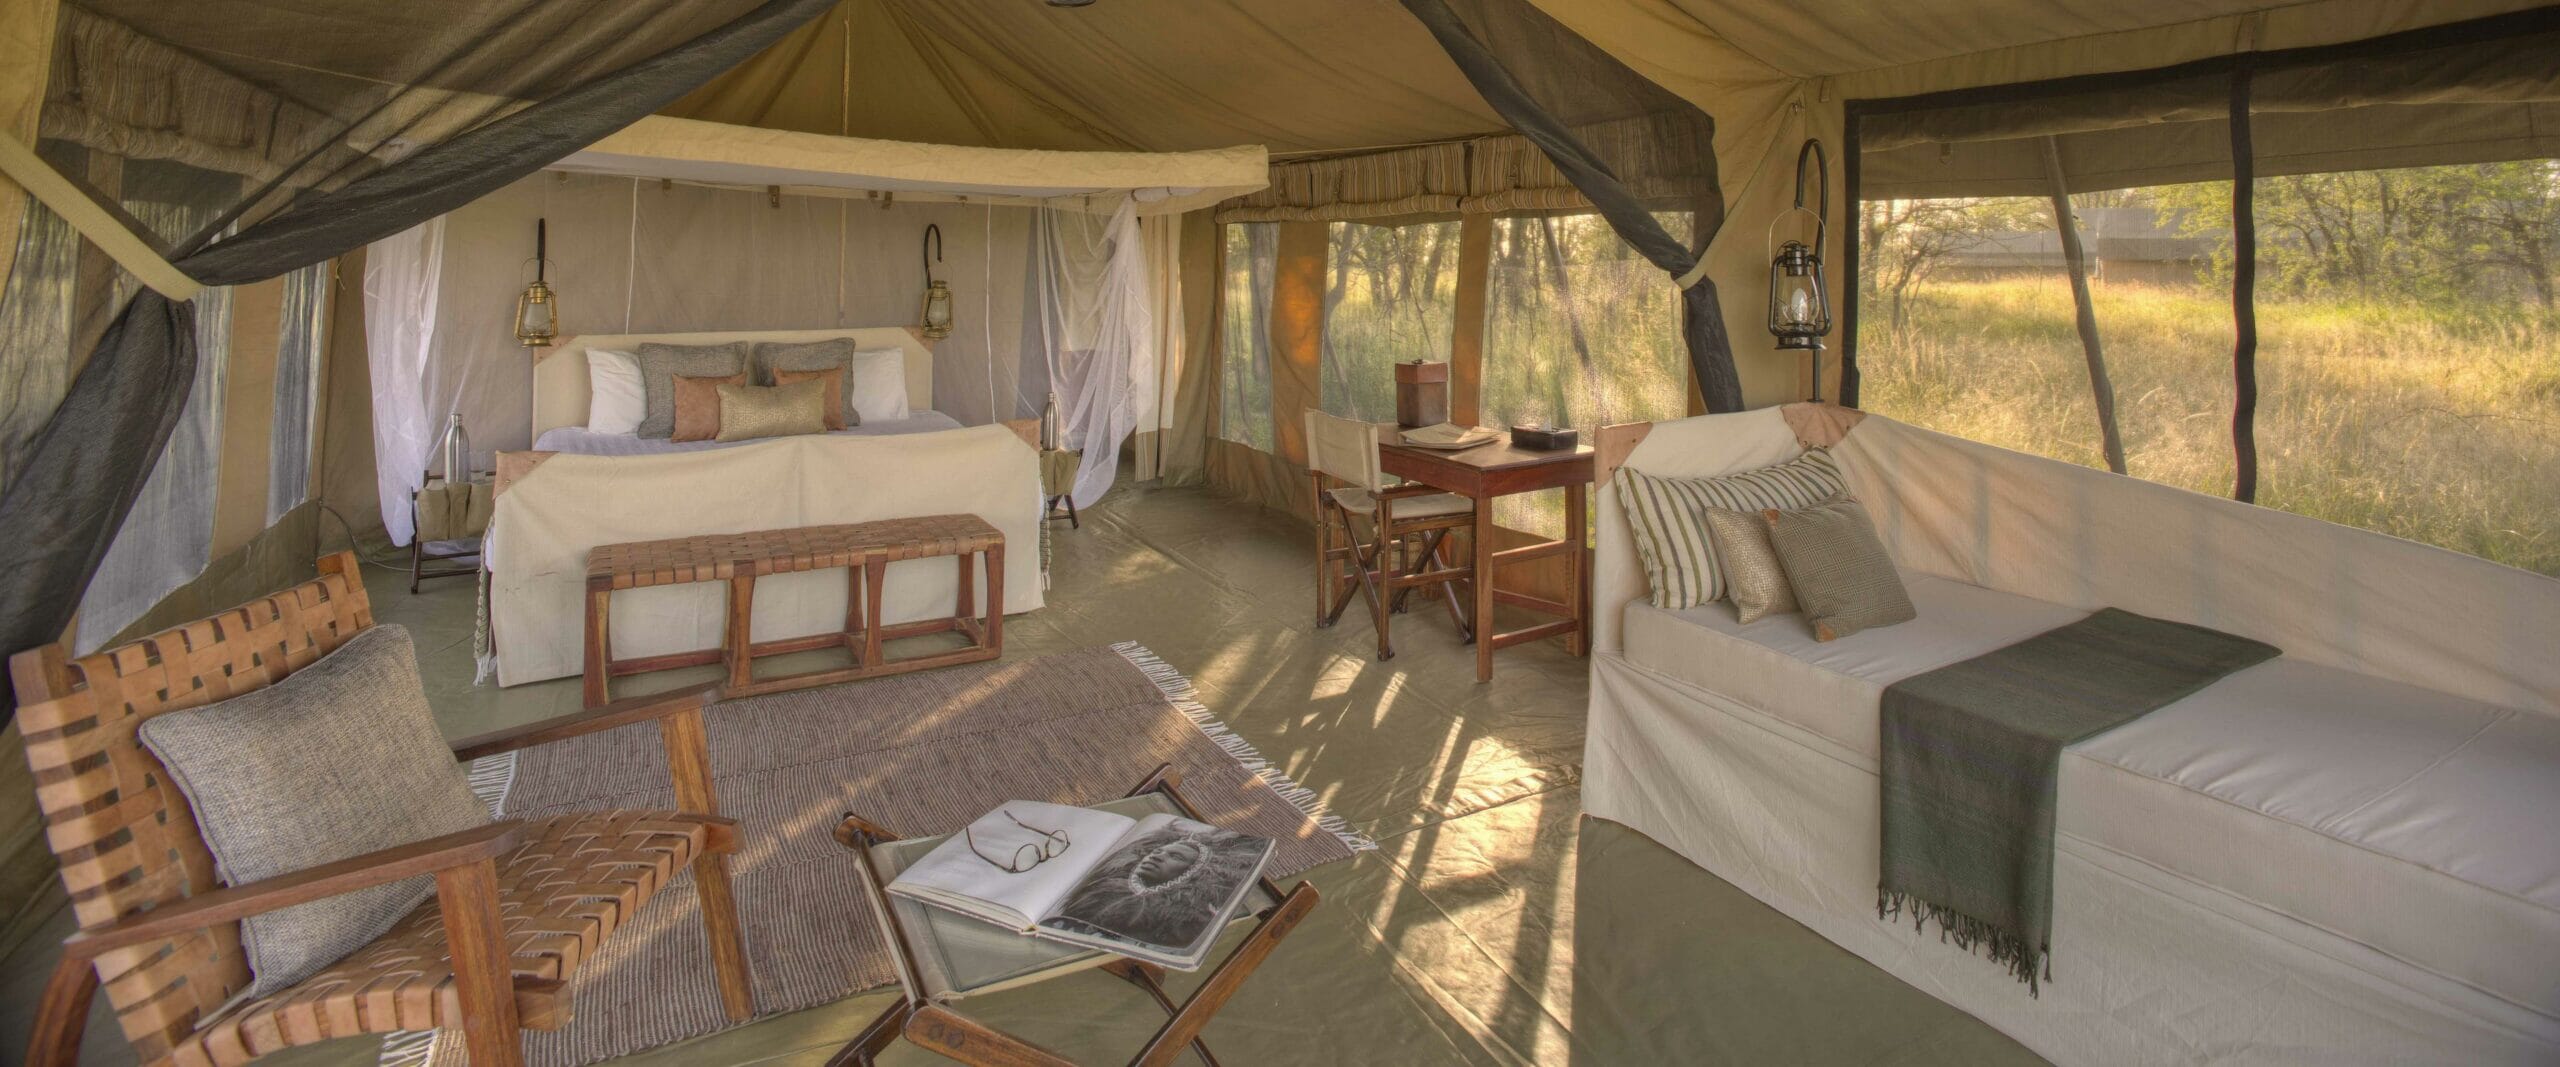 olakira-bedroom-tent-interior-scaled